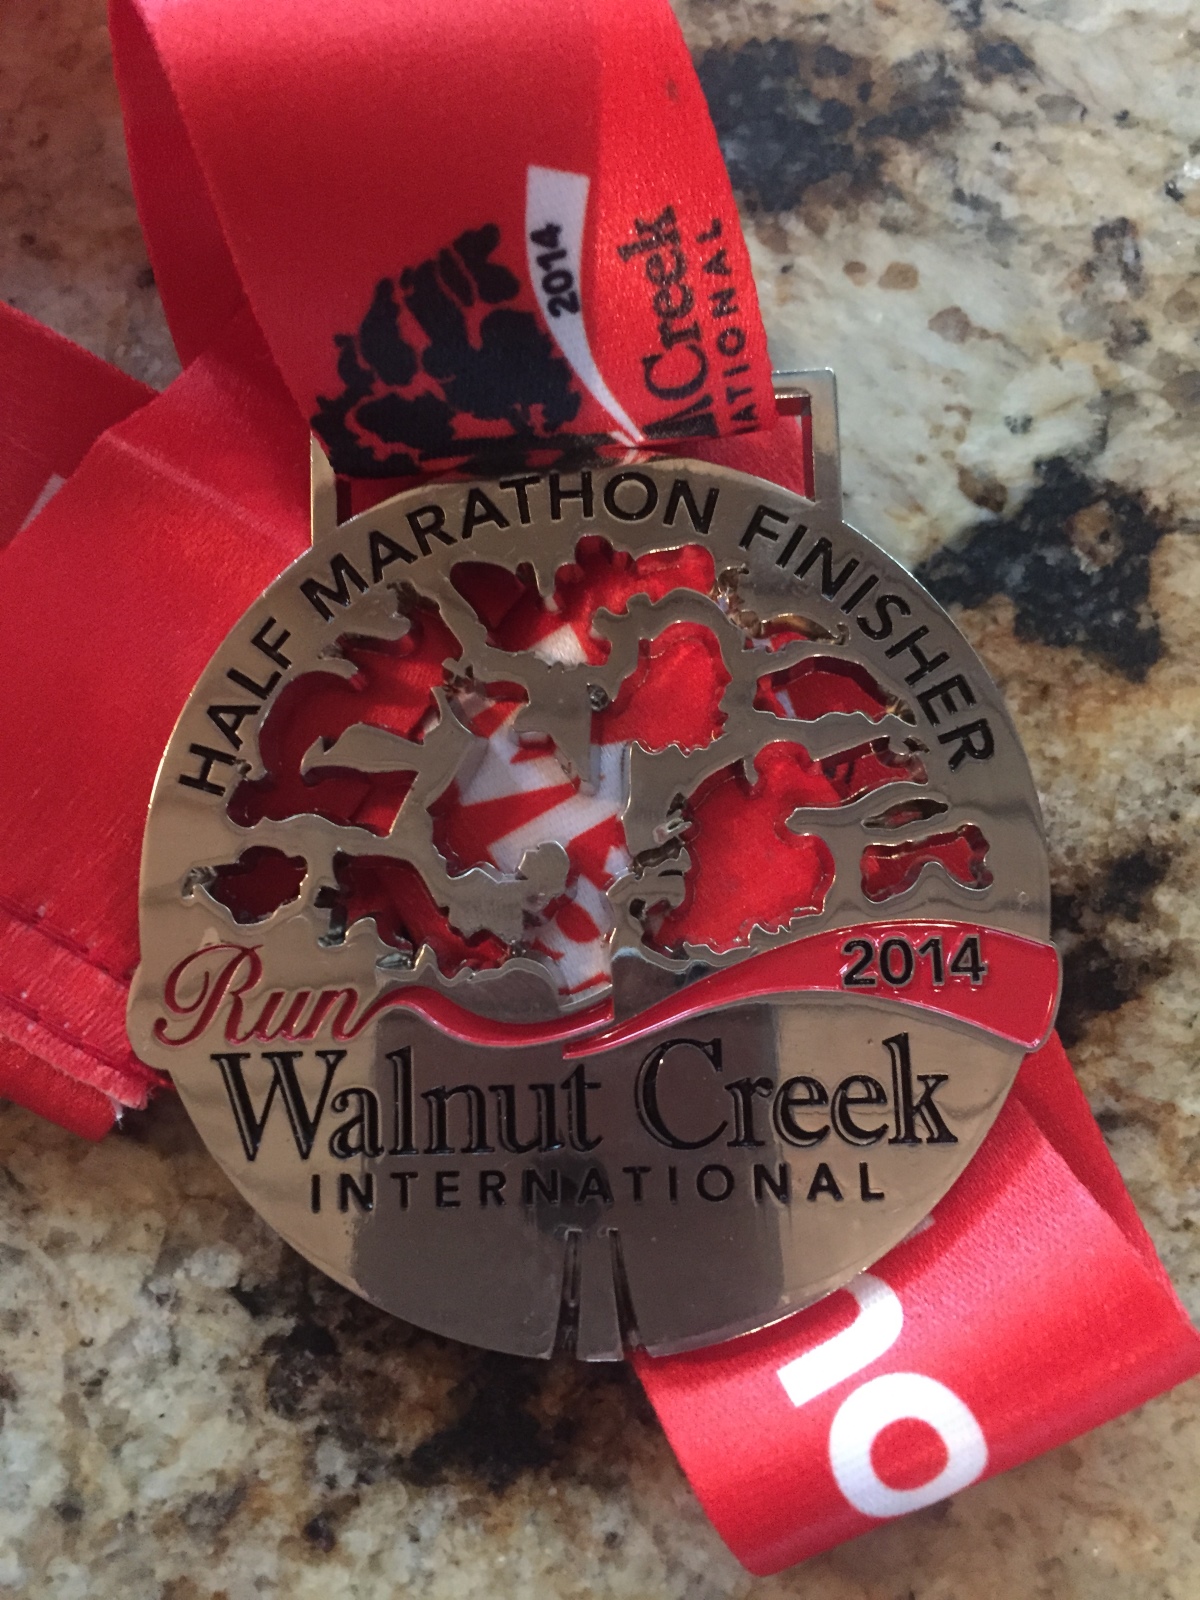 Walnut Creek Half Marathon